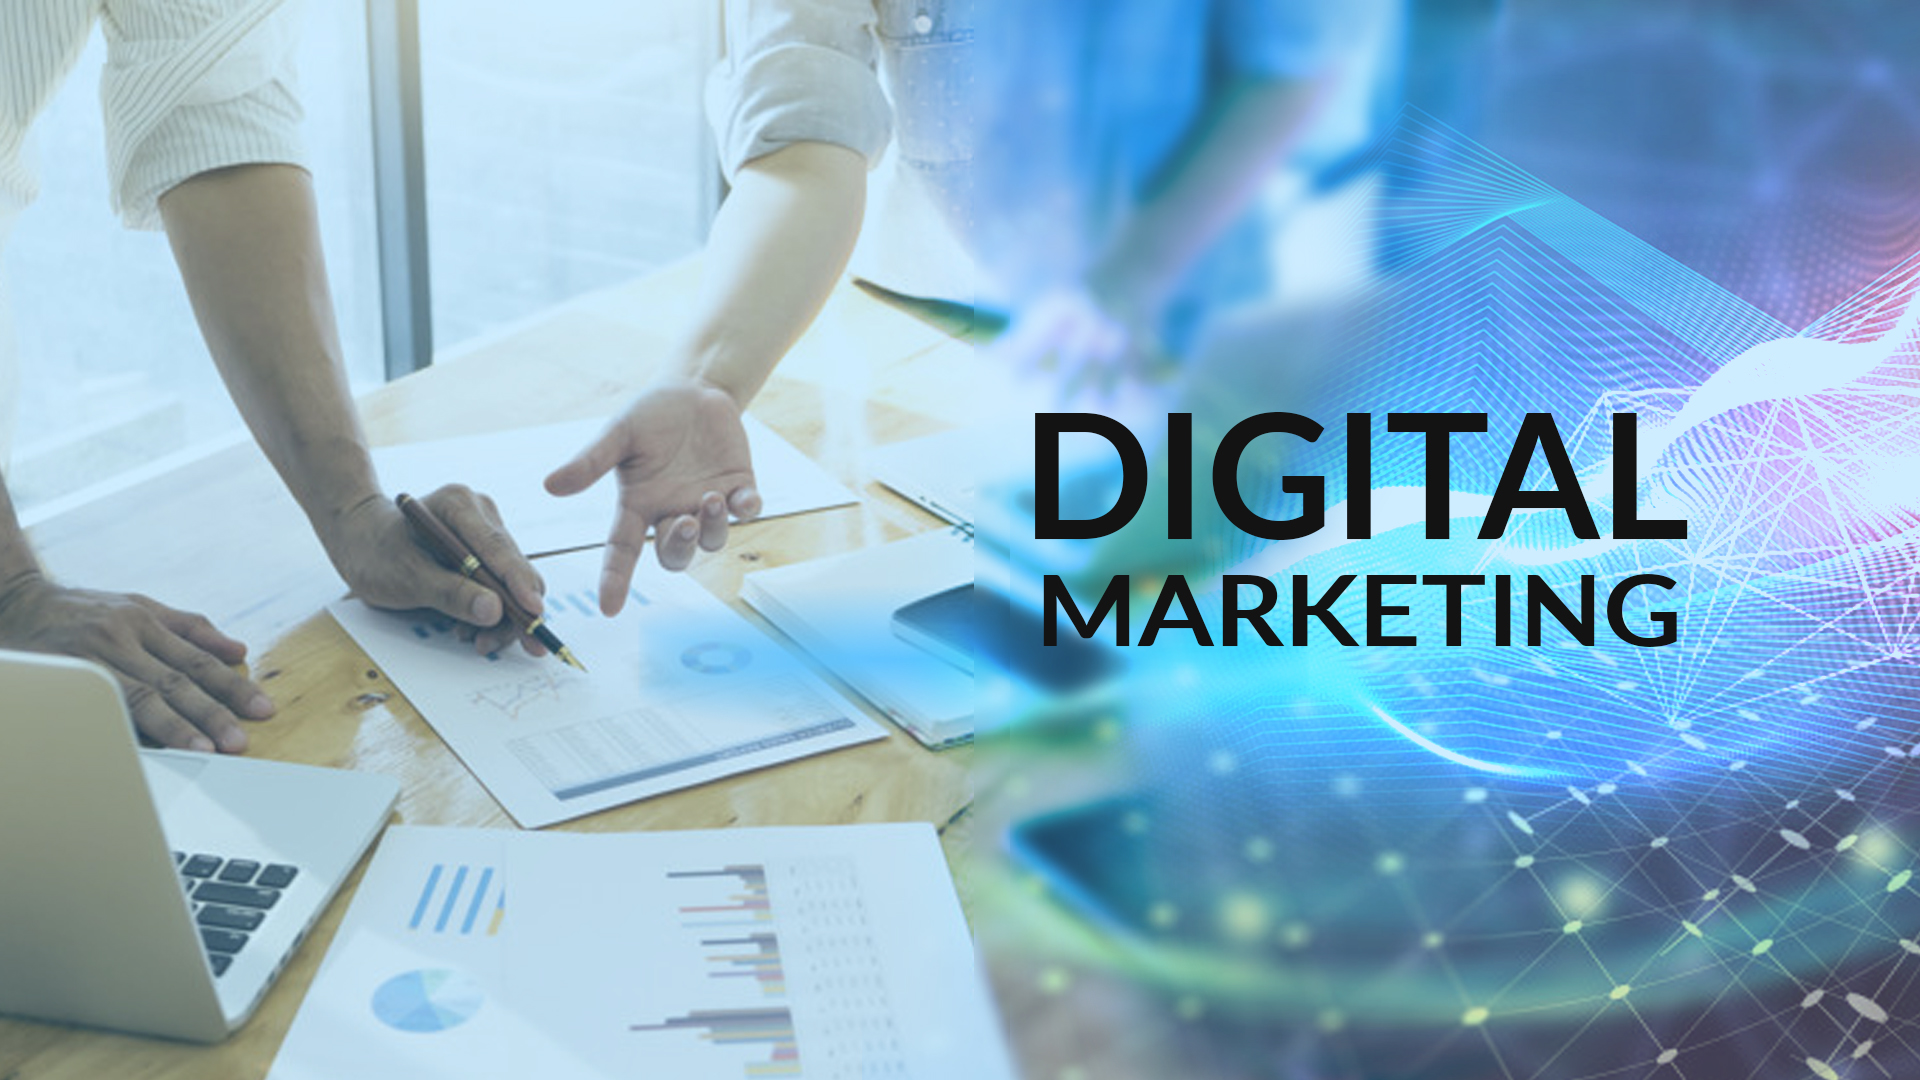 Digital Marketing Agency Dubai